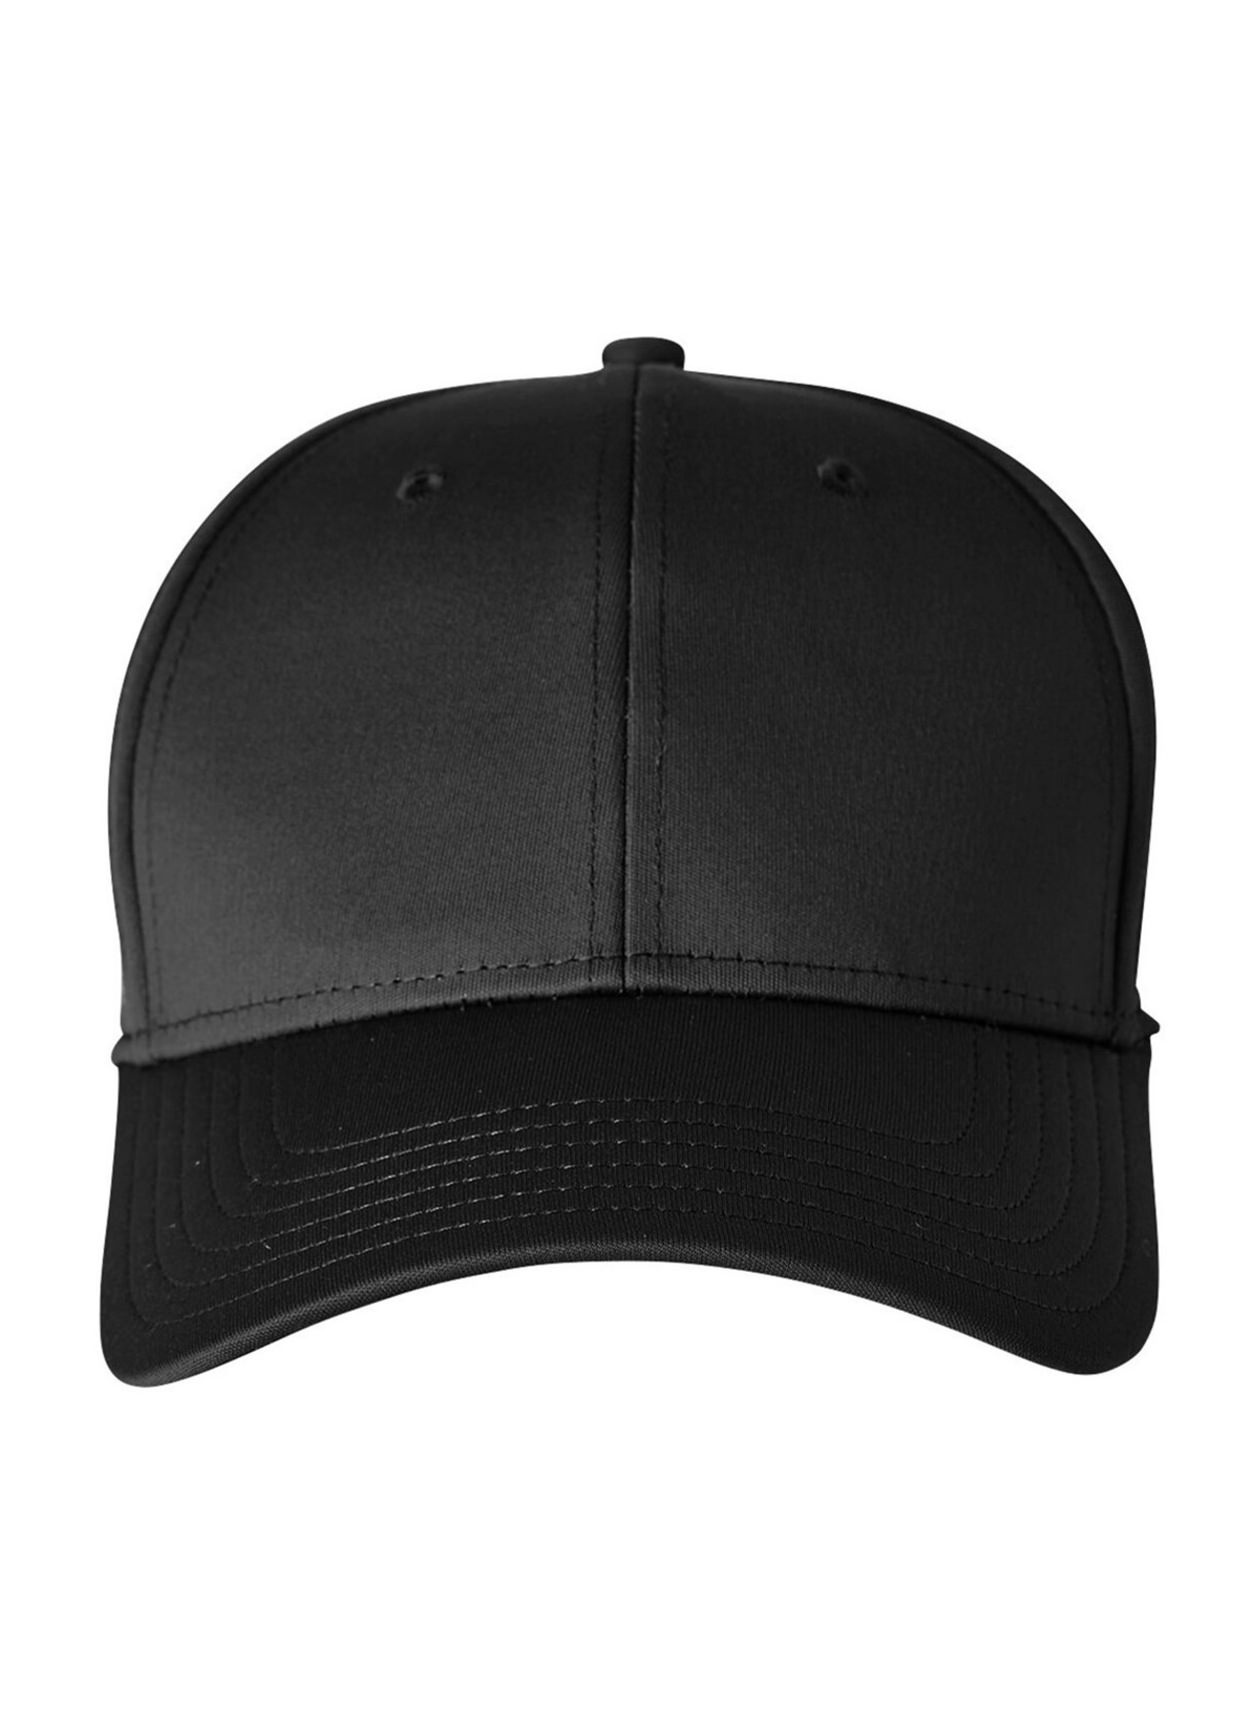 Spyder Black Frostbit Hat